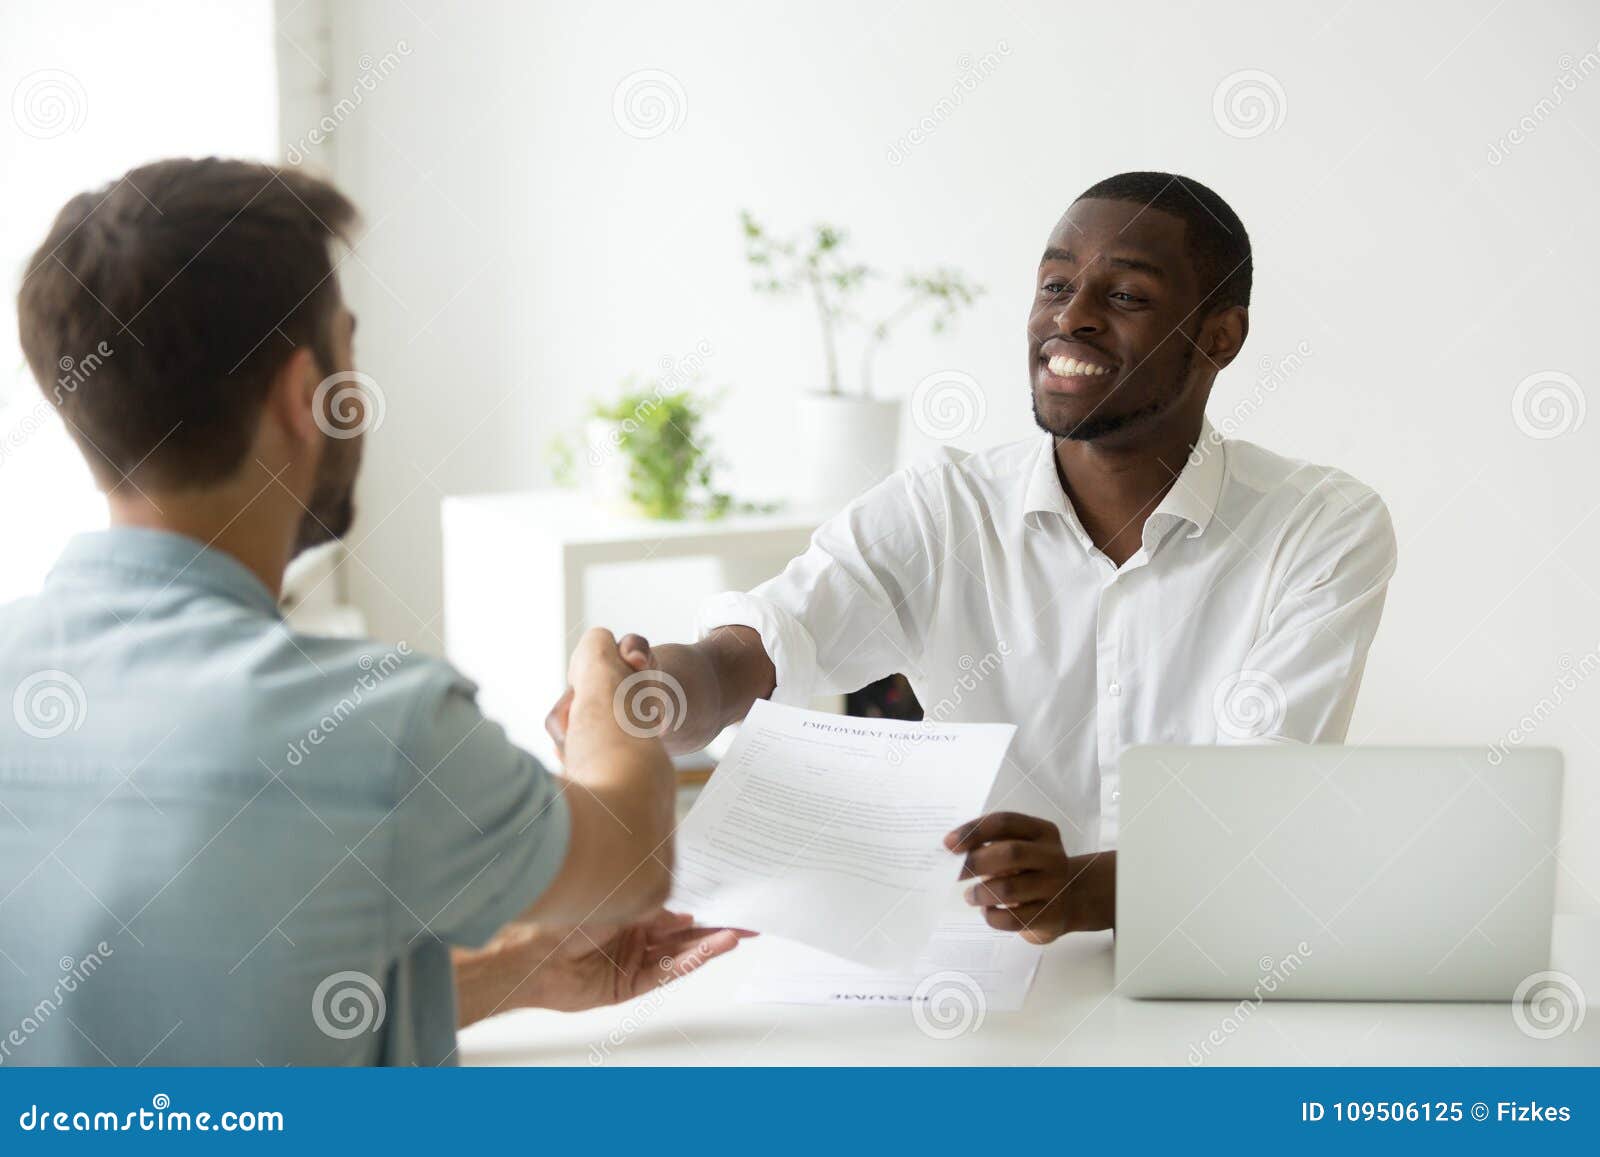 african employer handshaking new hire caucasian employee holding